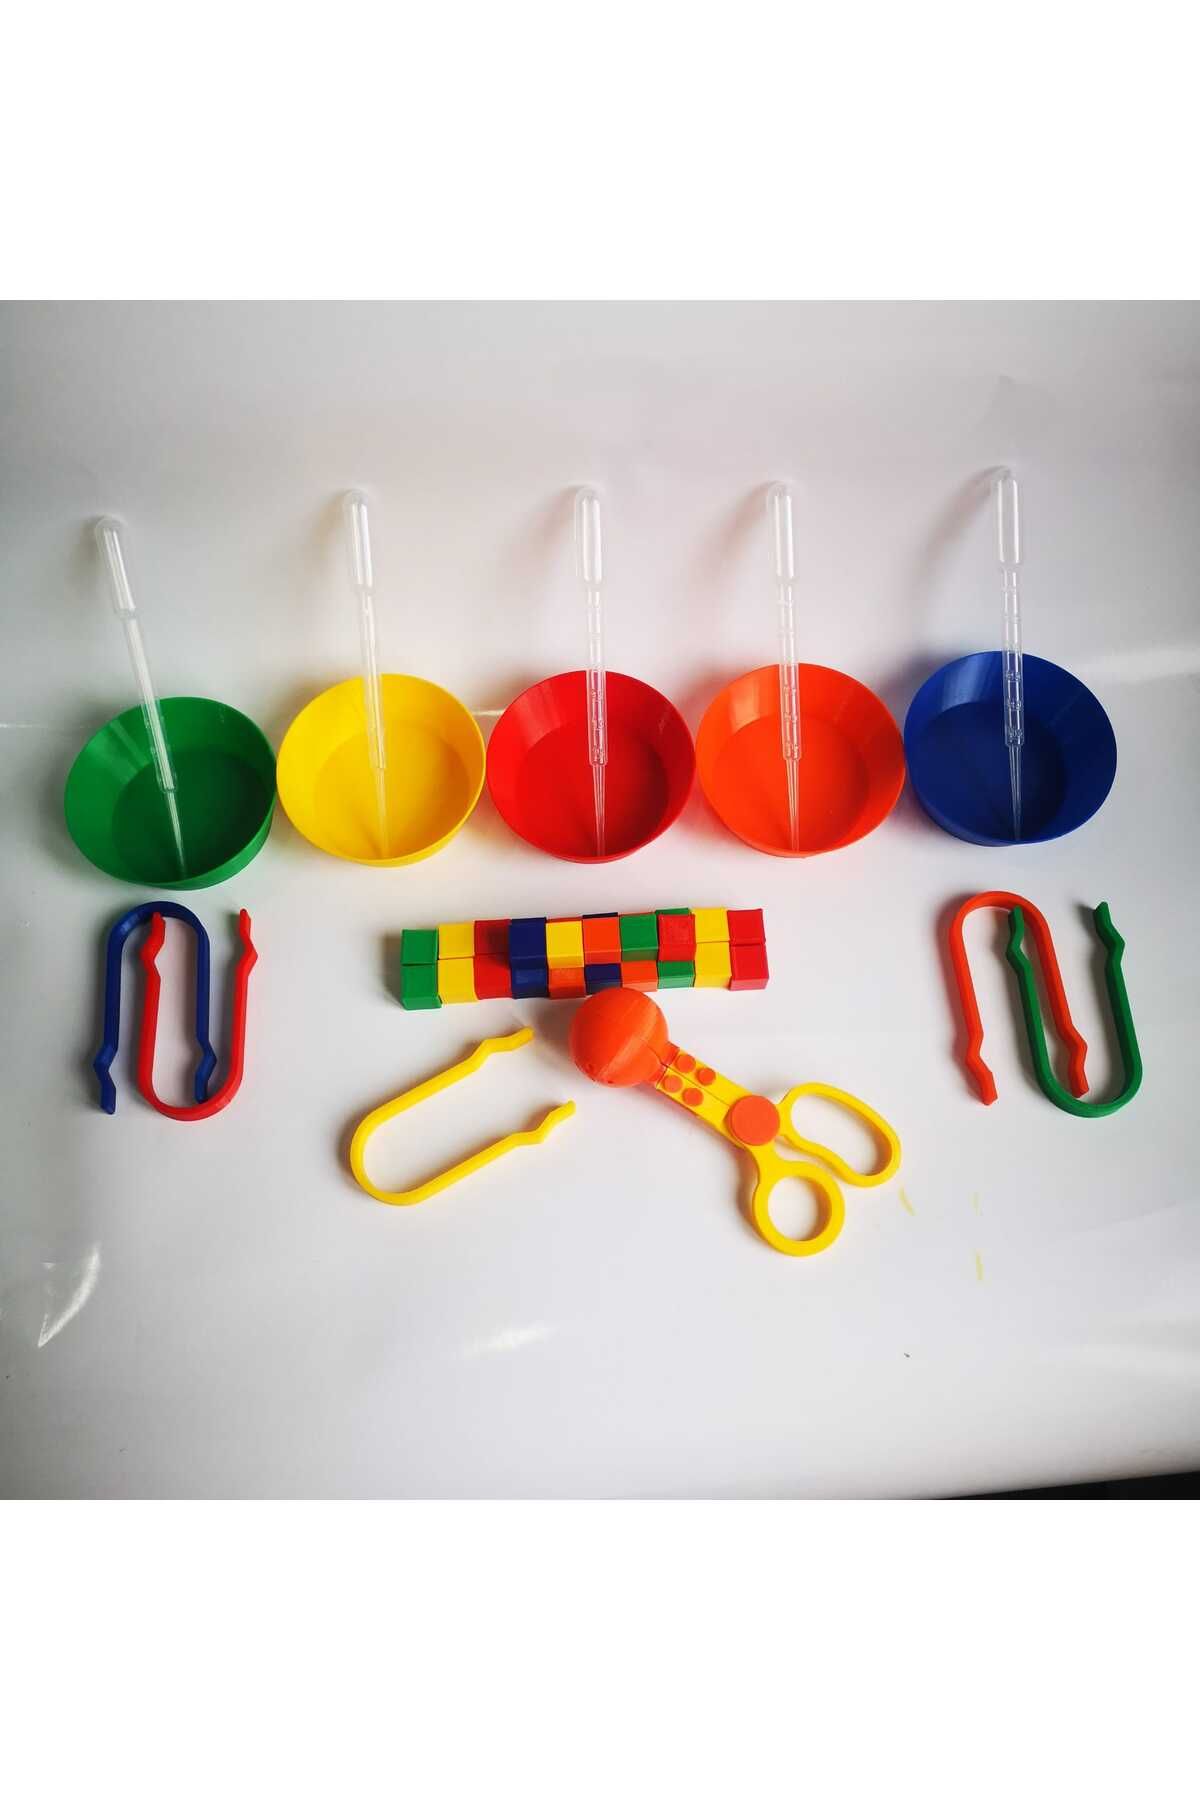 Zells workshop Renkli Küpler Balon Makas, 1 adet Balon Makas 5 adet (kase, cımbız, pastör pipet) ve 25 adet küp